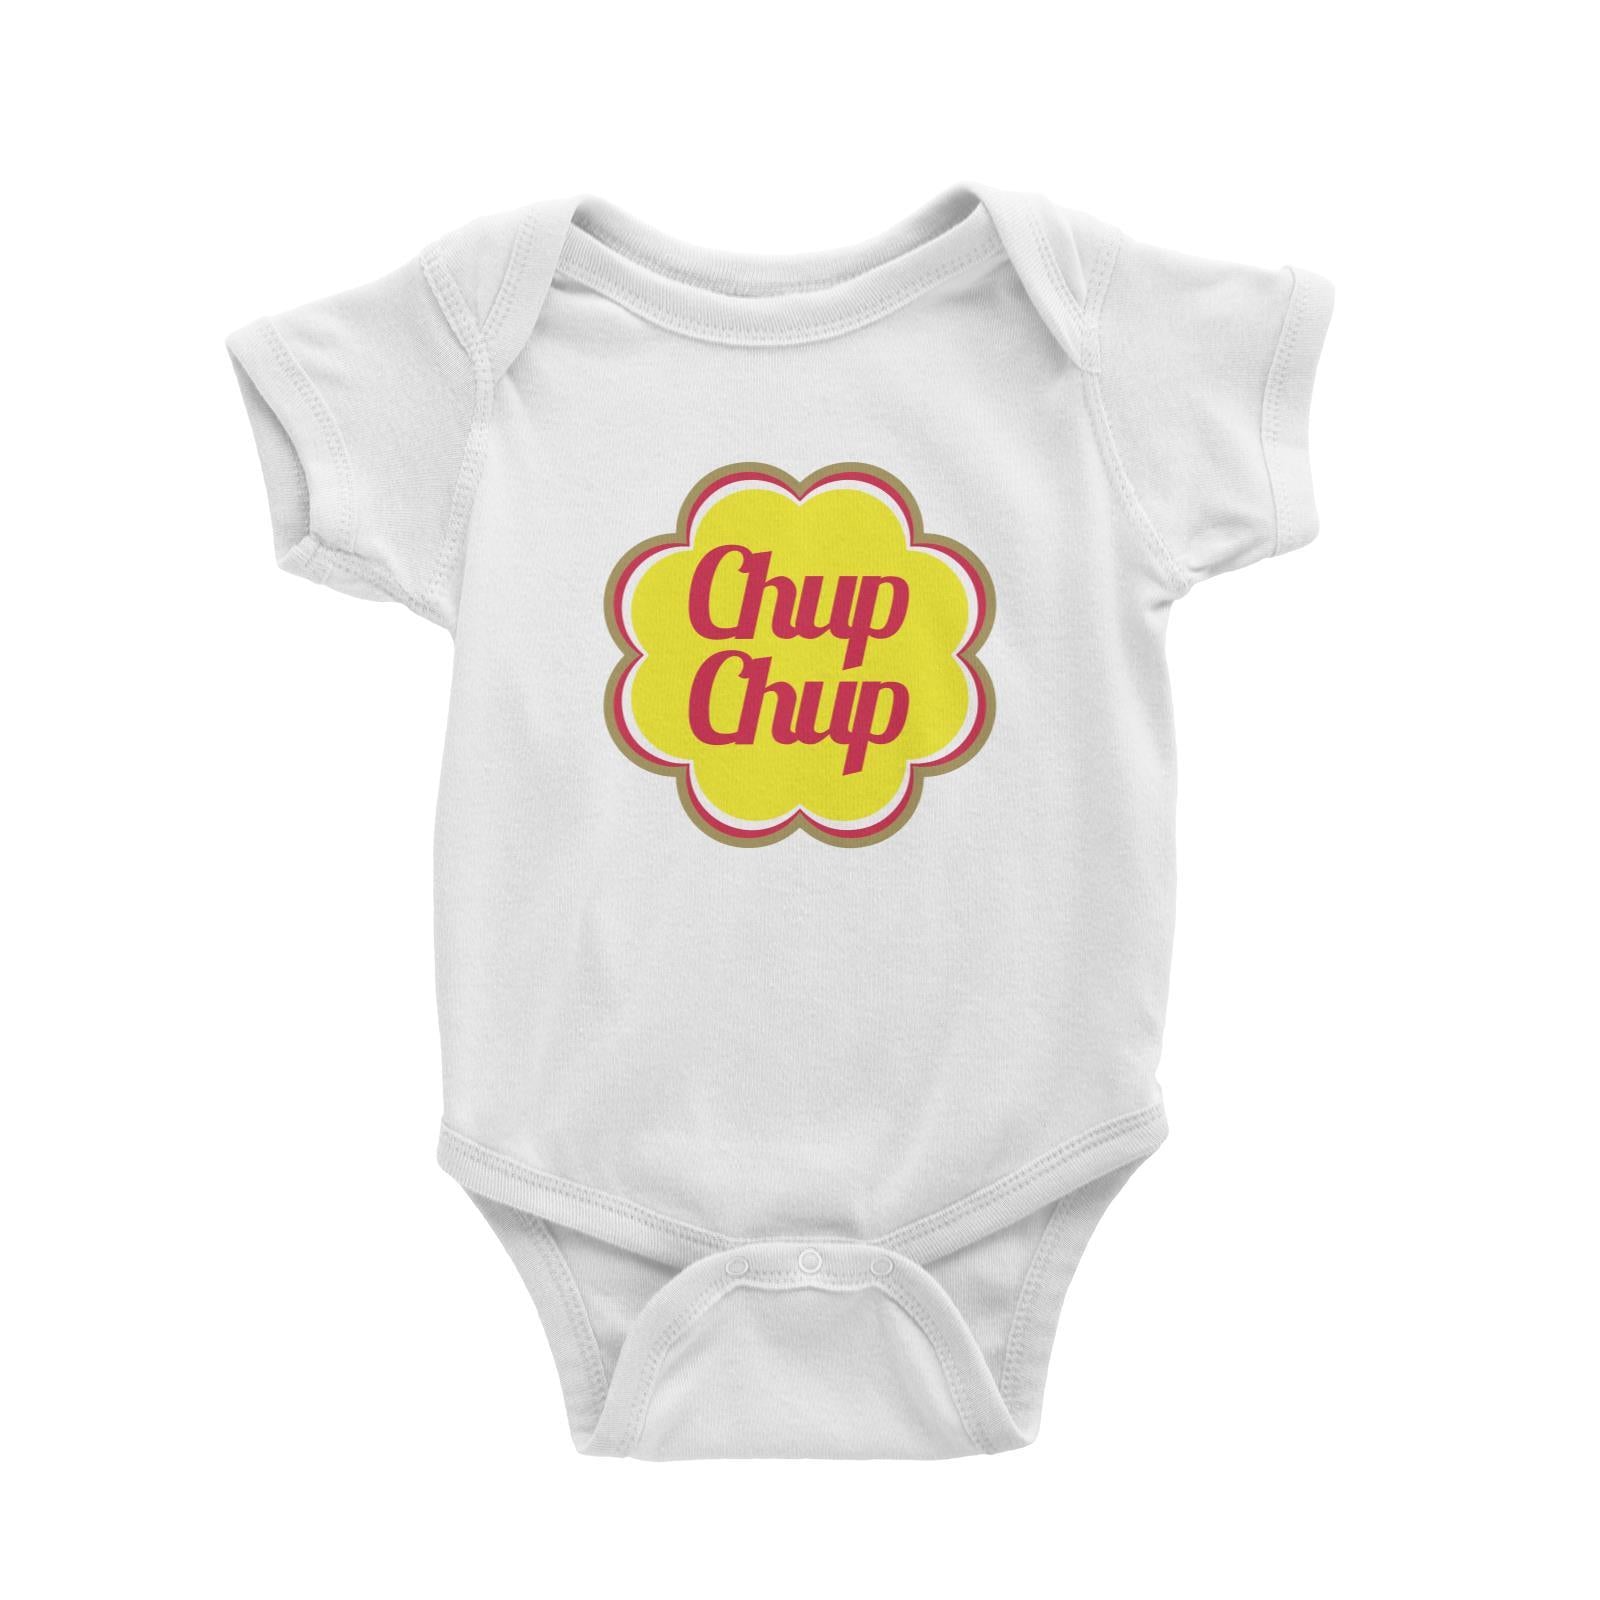 Slang Statement Chup Chup Baby Romper